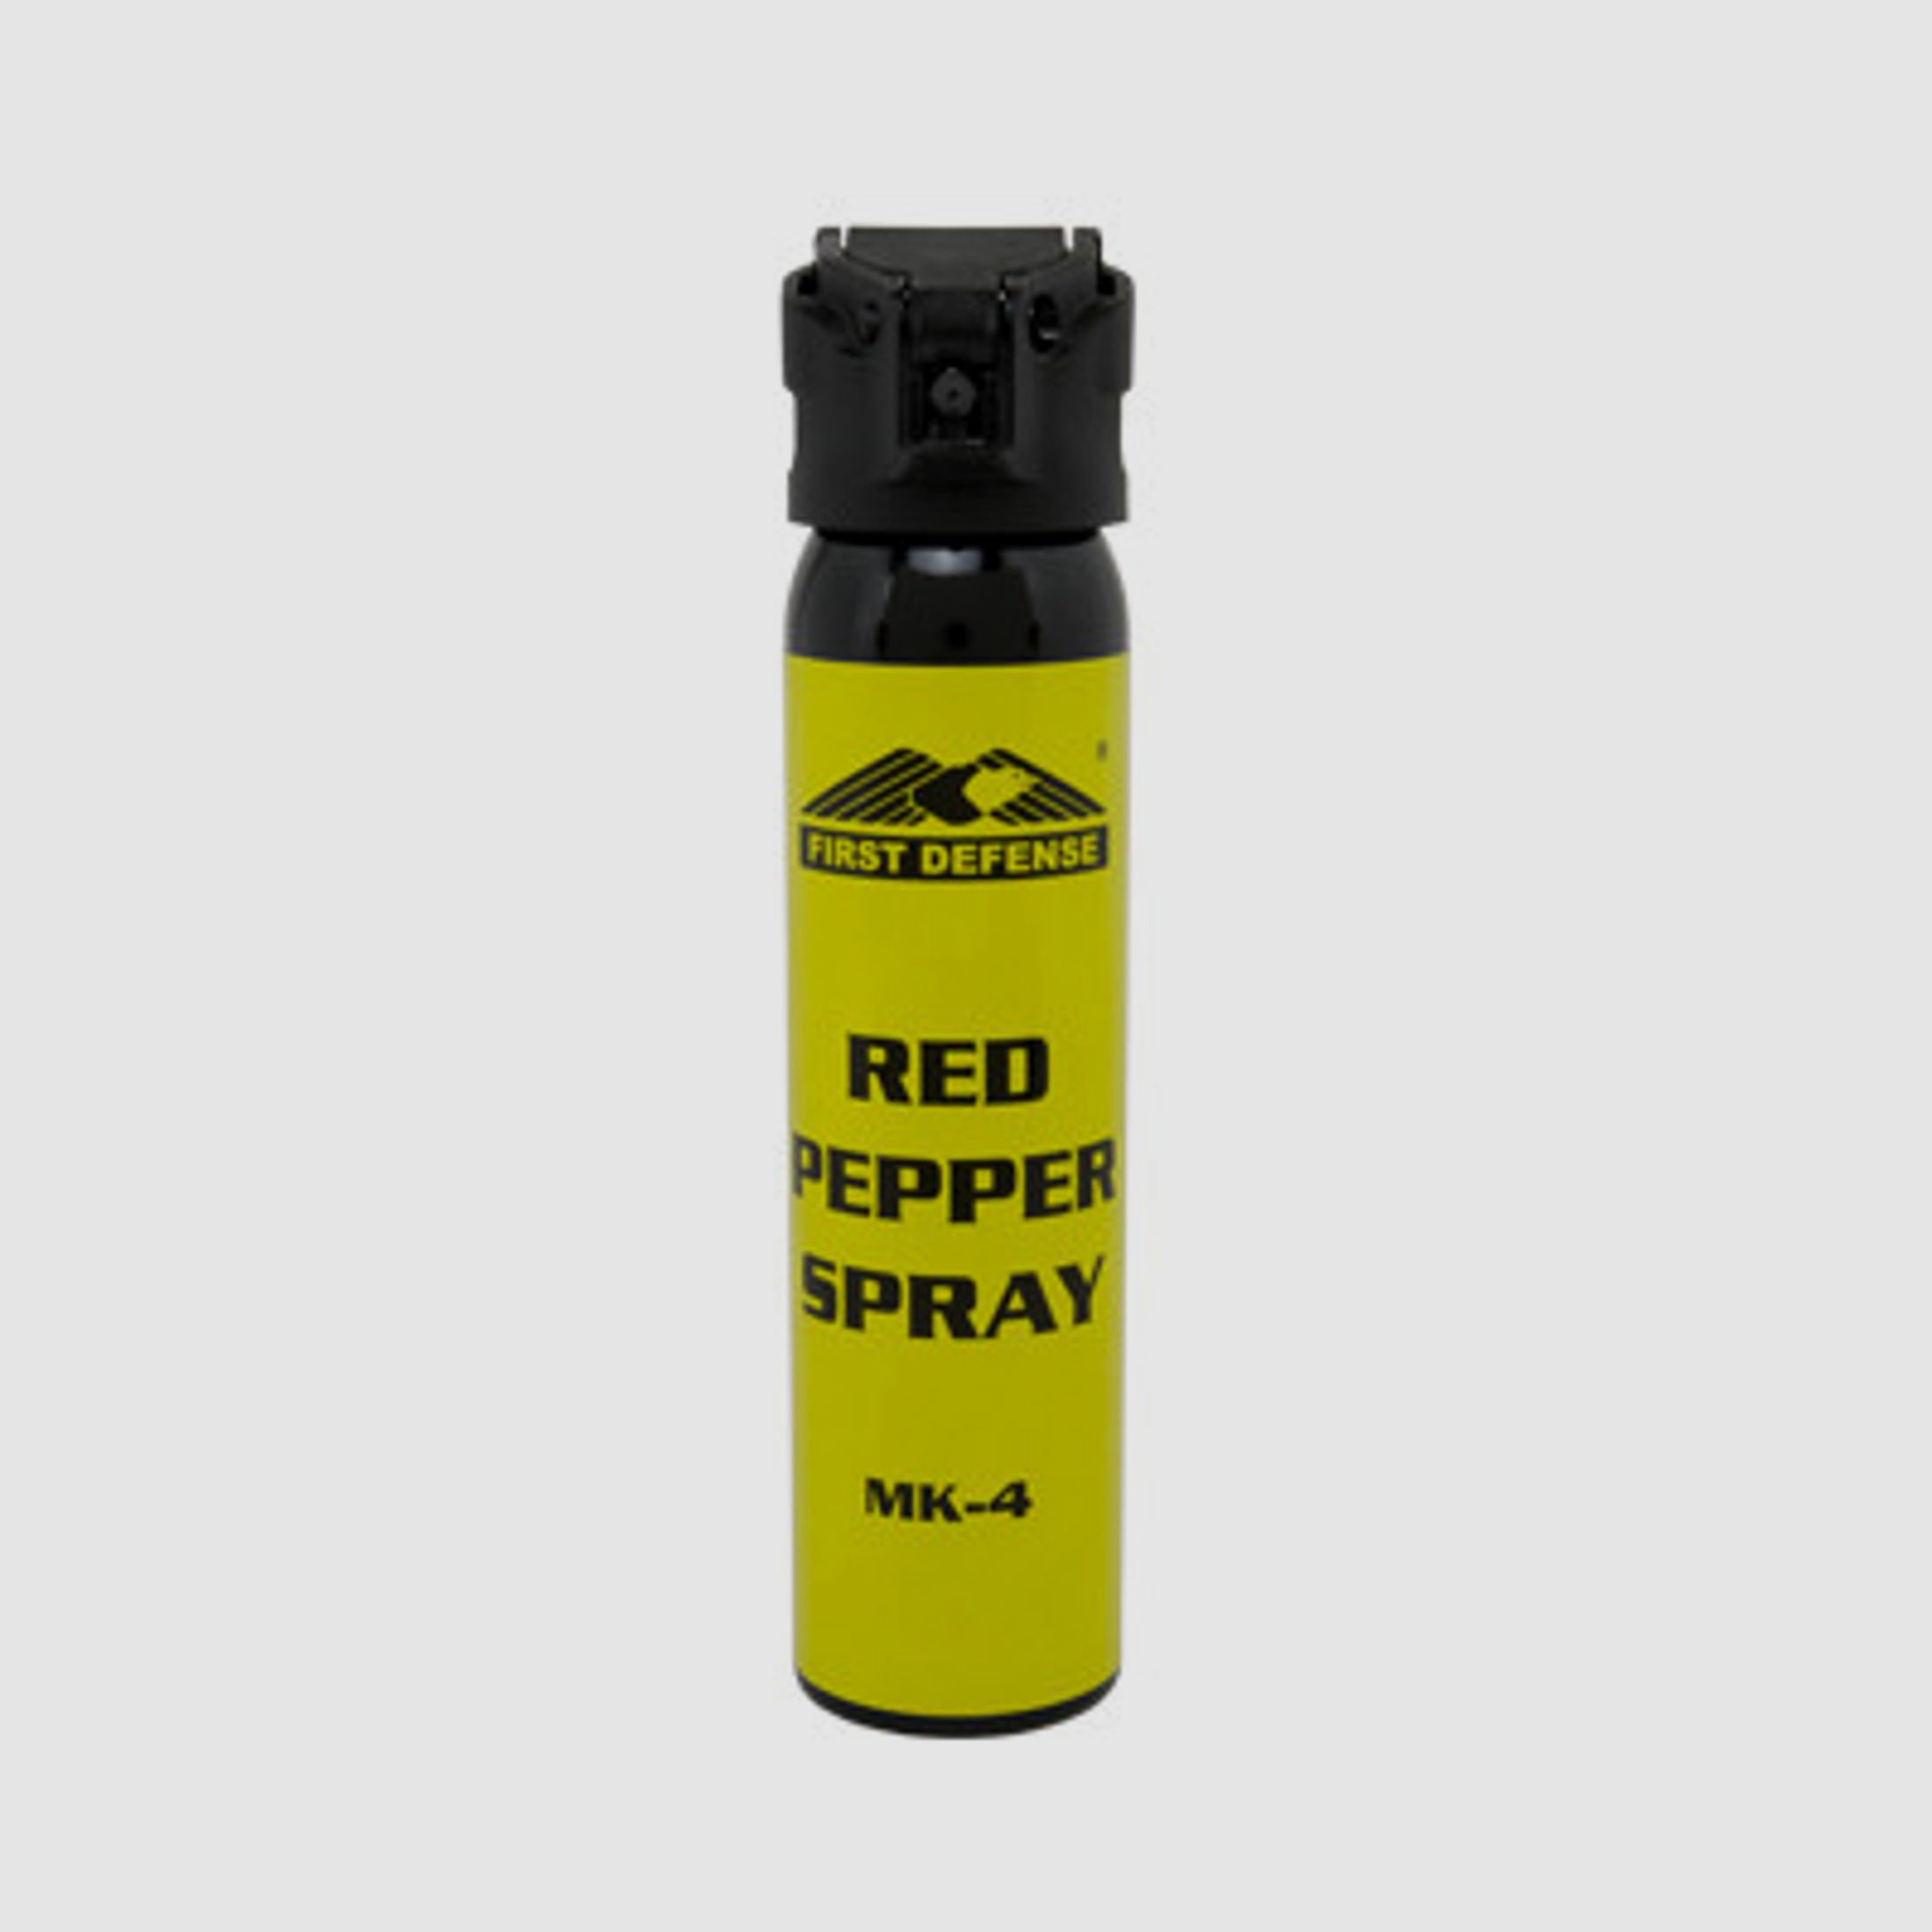 First Defense Red Pepper Spray MK-4 75ml